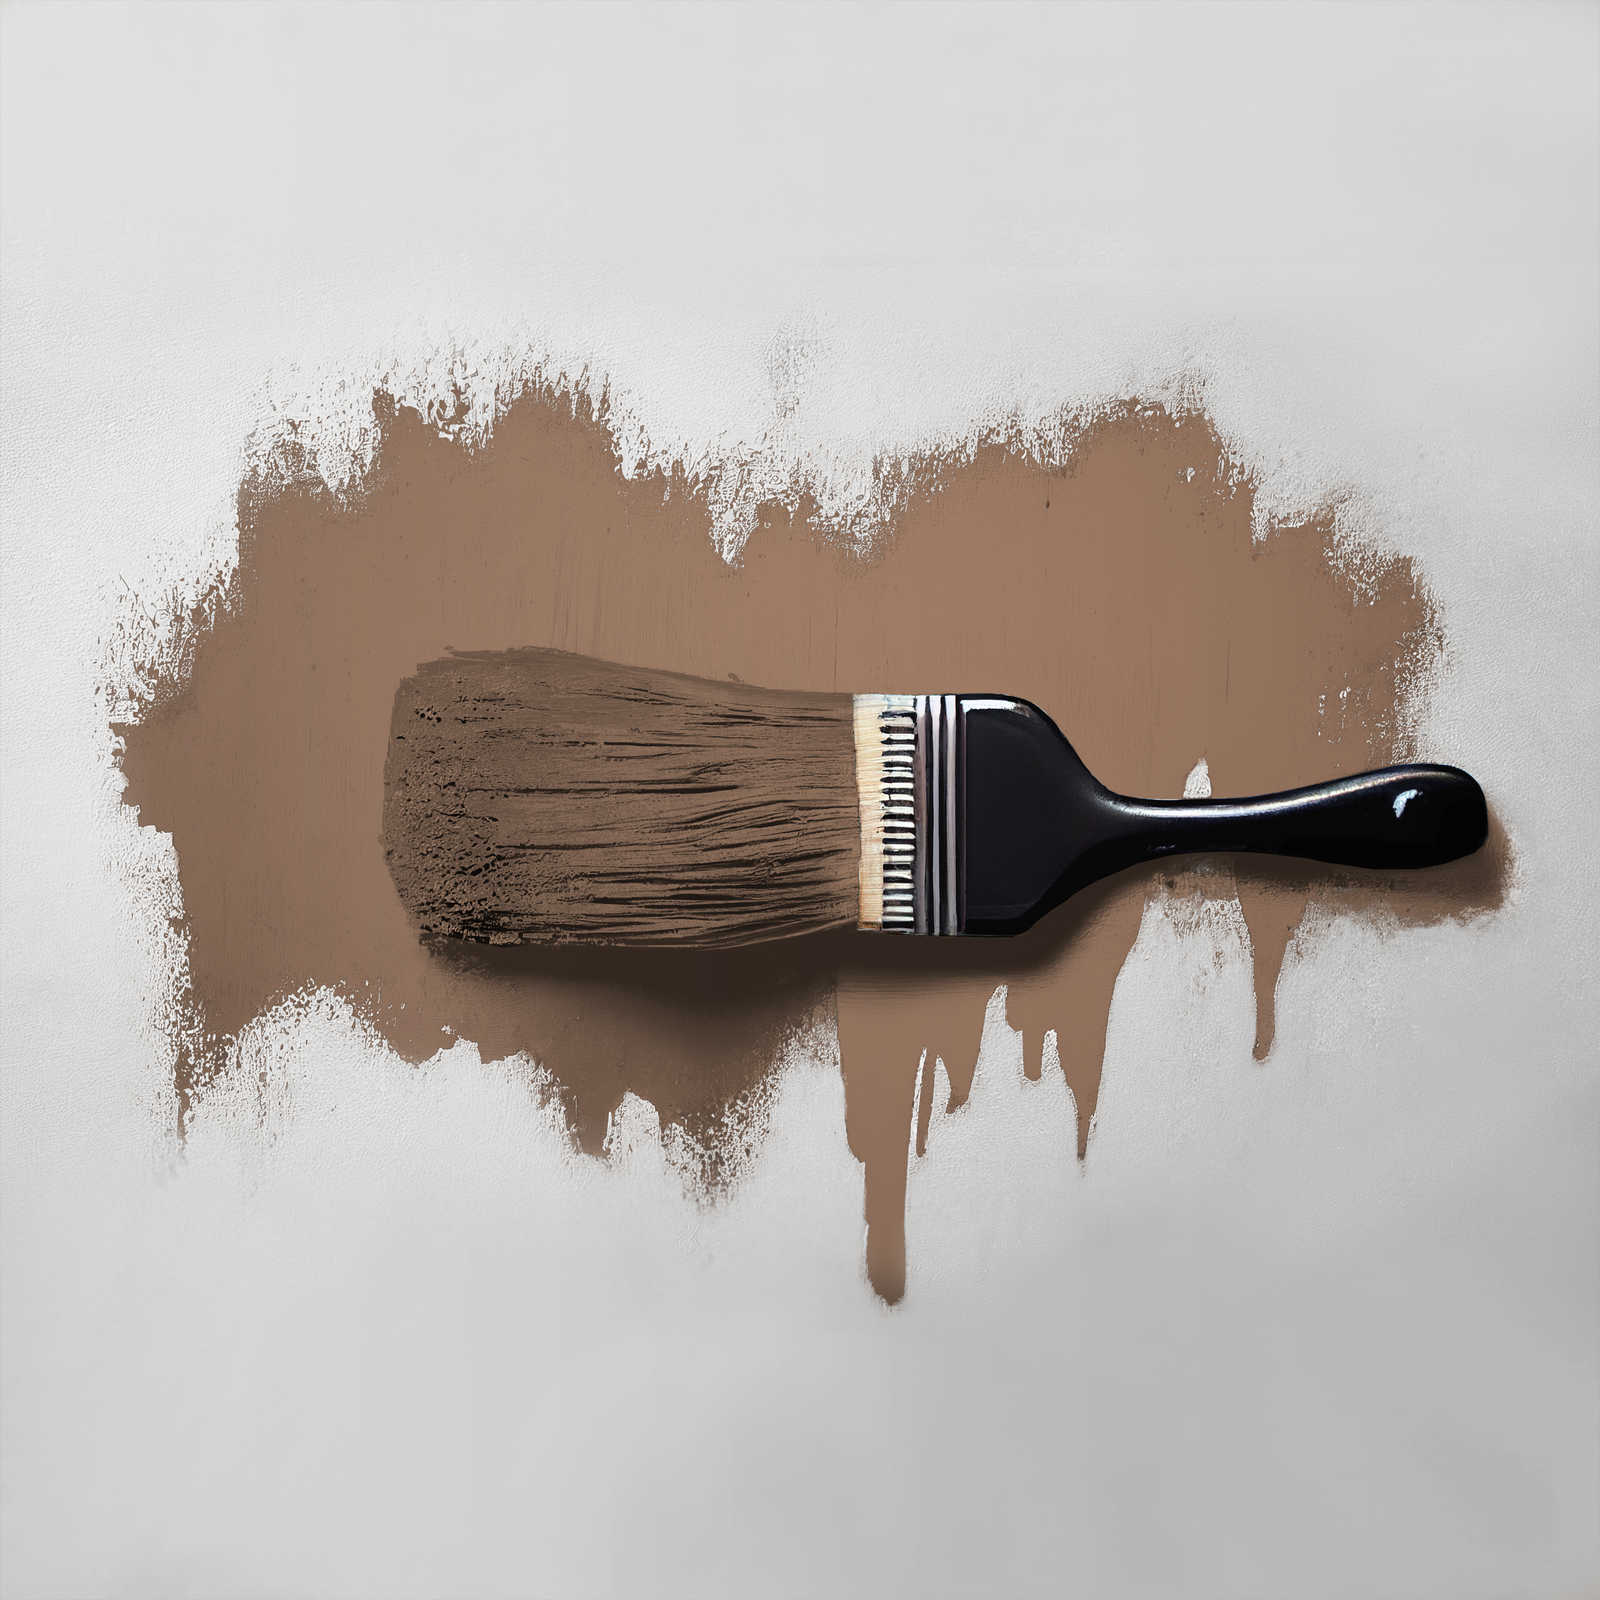             Peinture murale TCK6013 »Rosy Rosine« en brun doré naturel – 2,5 litres
        